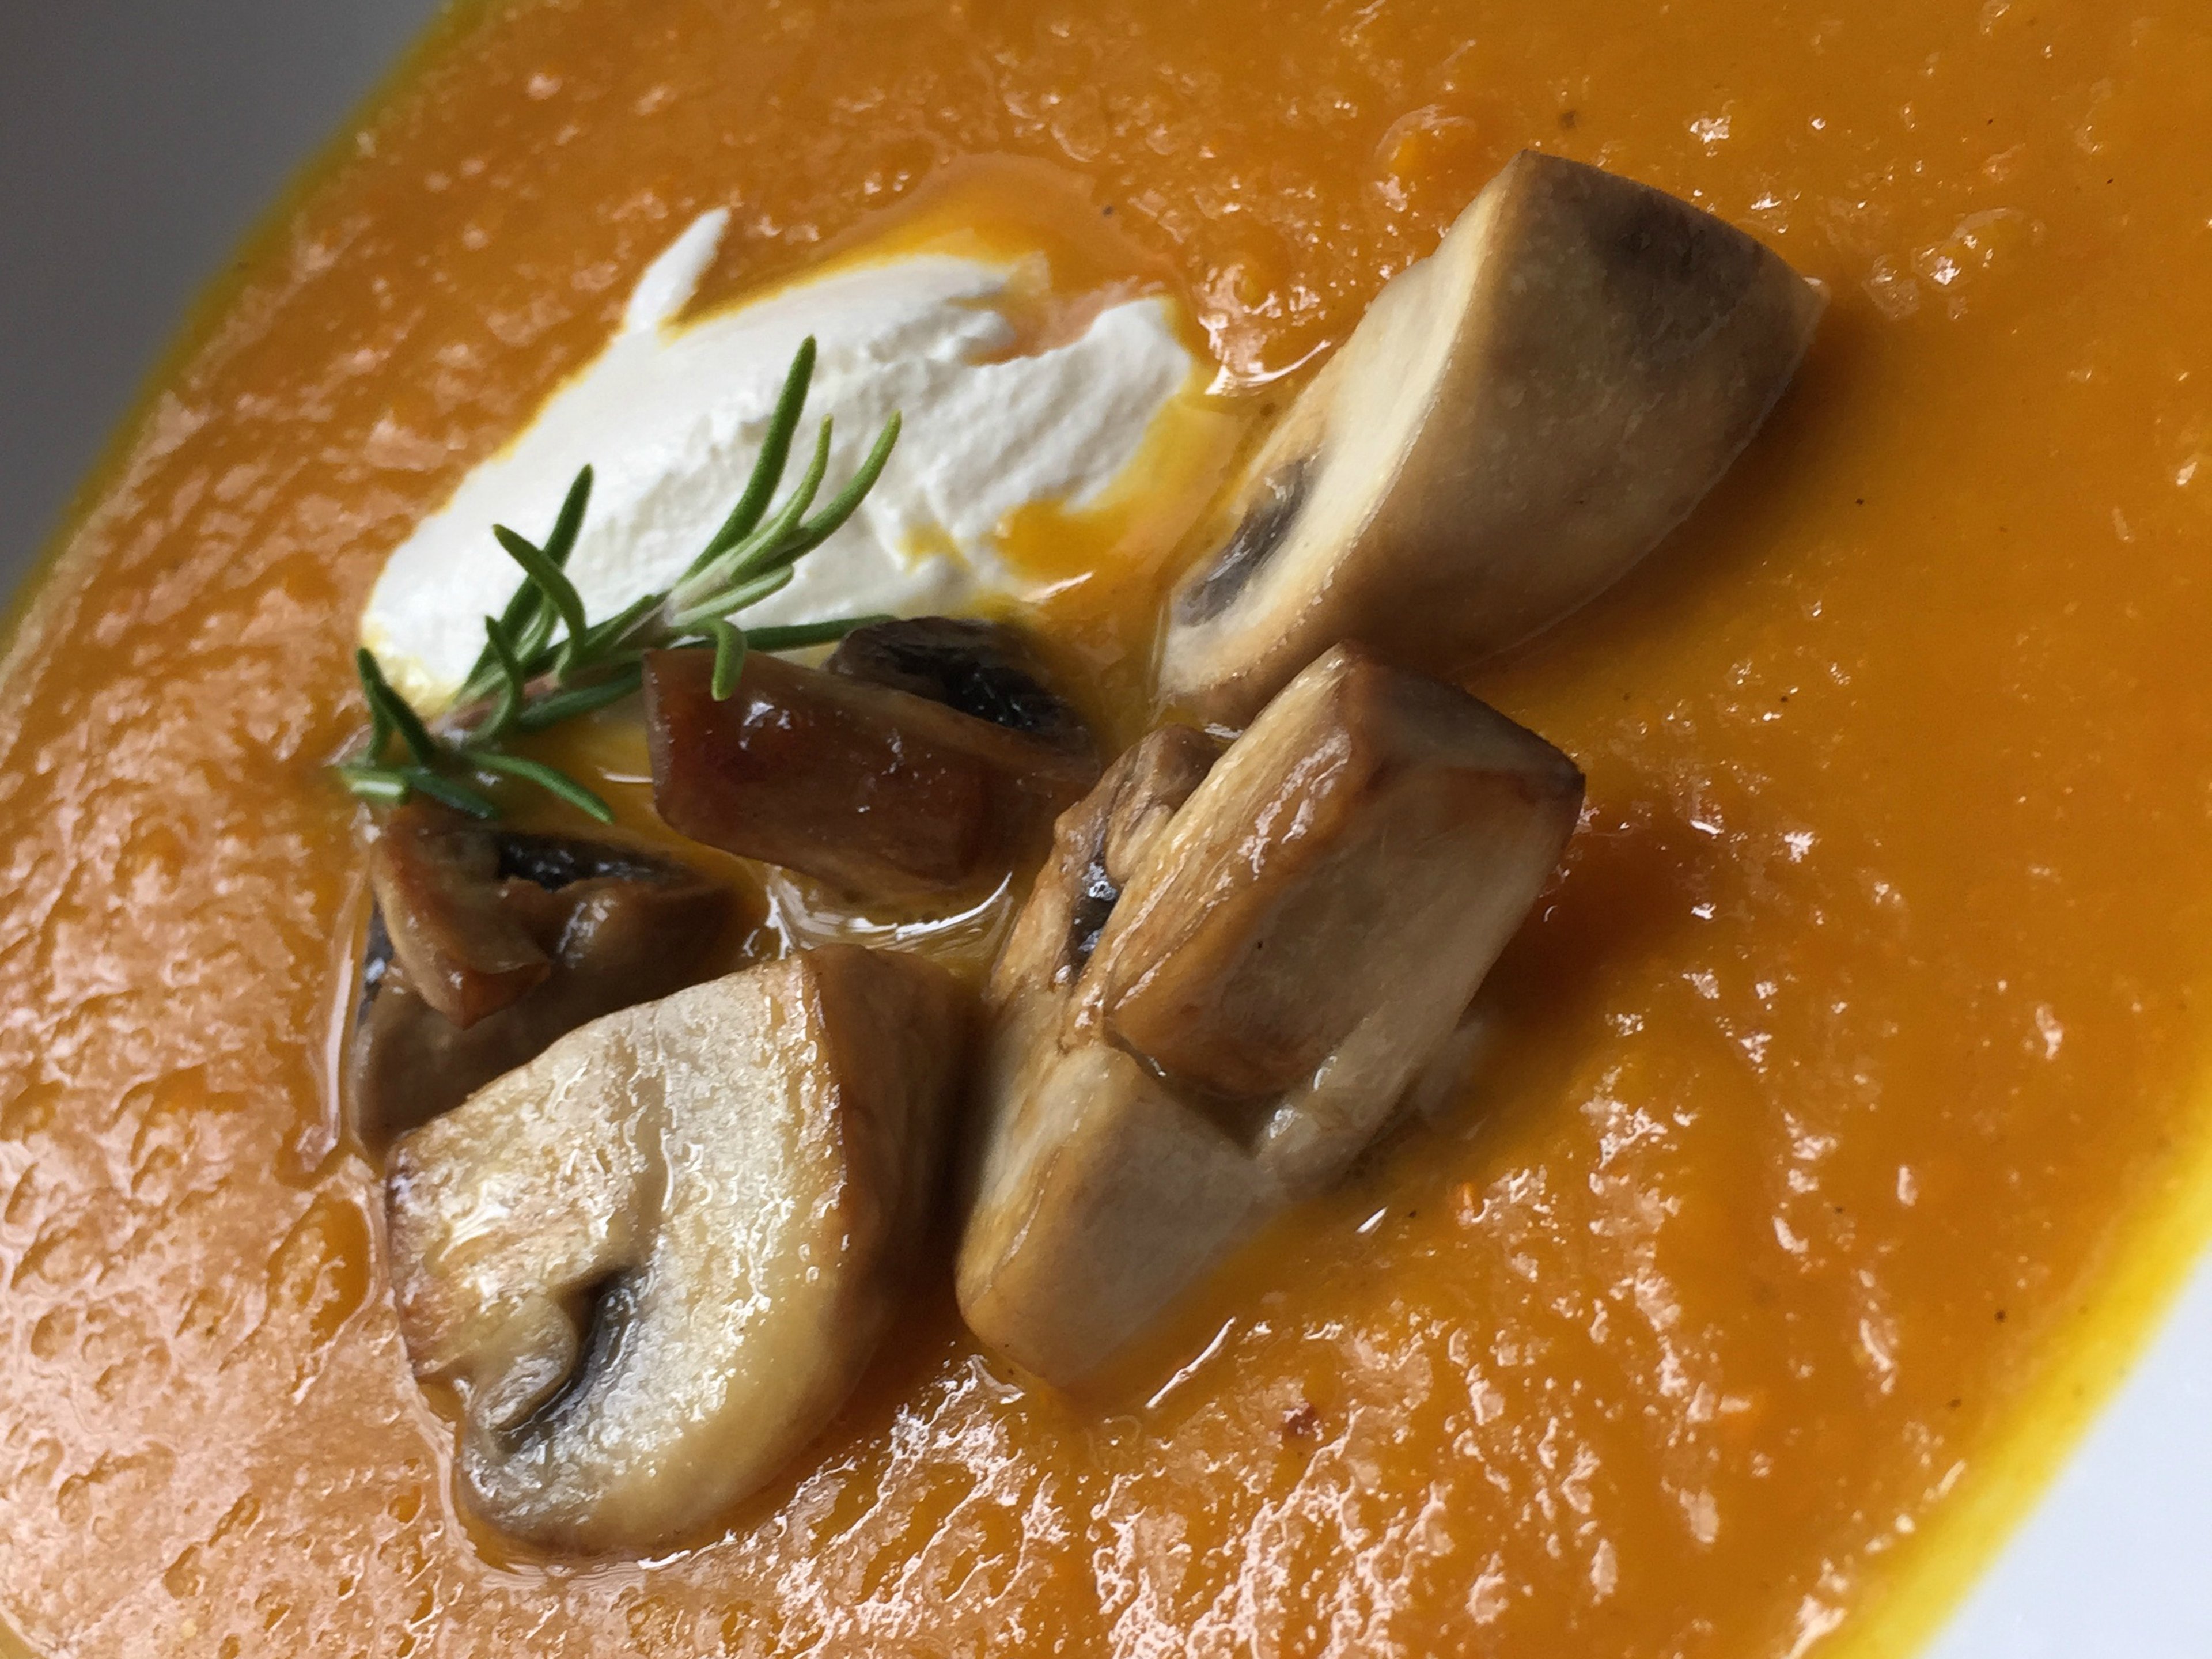 Pumpkin and carrot soup with sautéed mushrooms